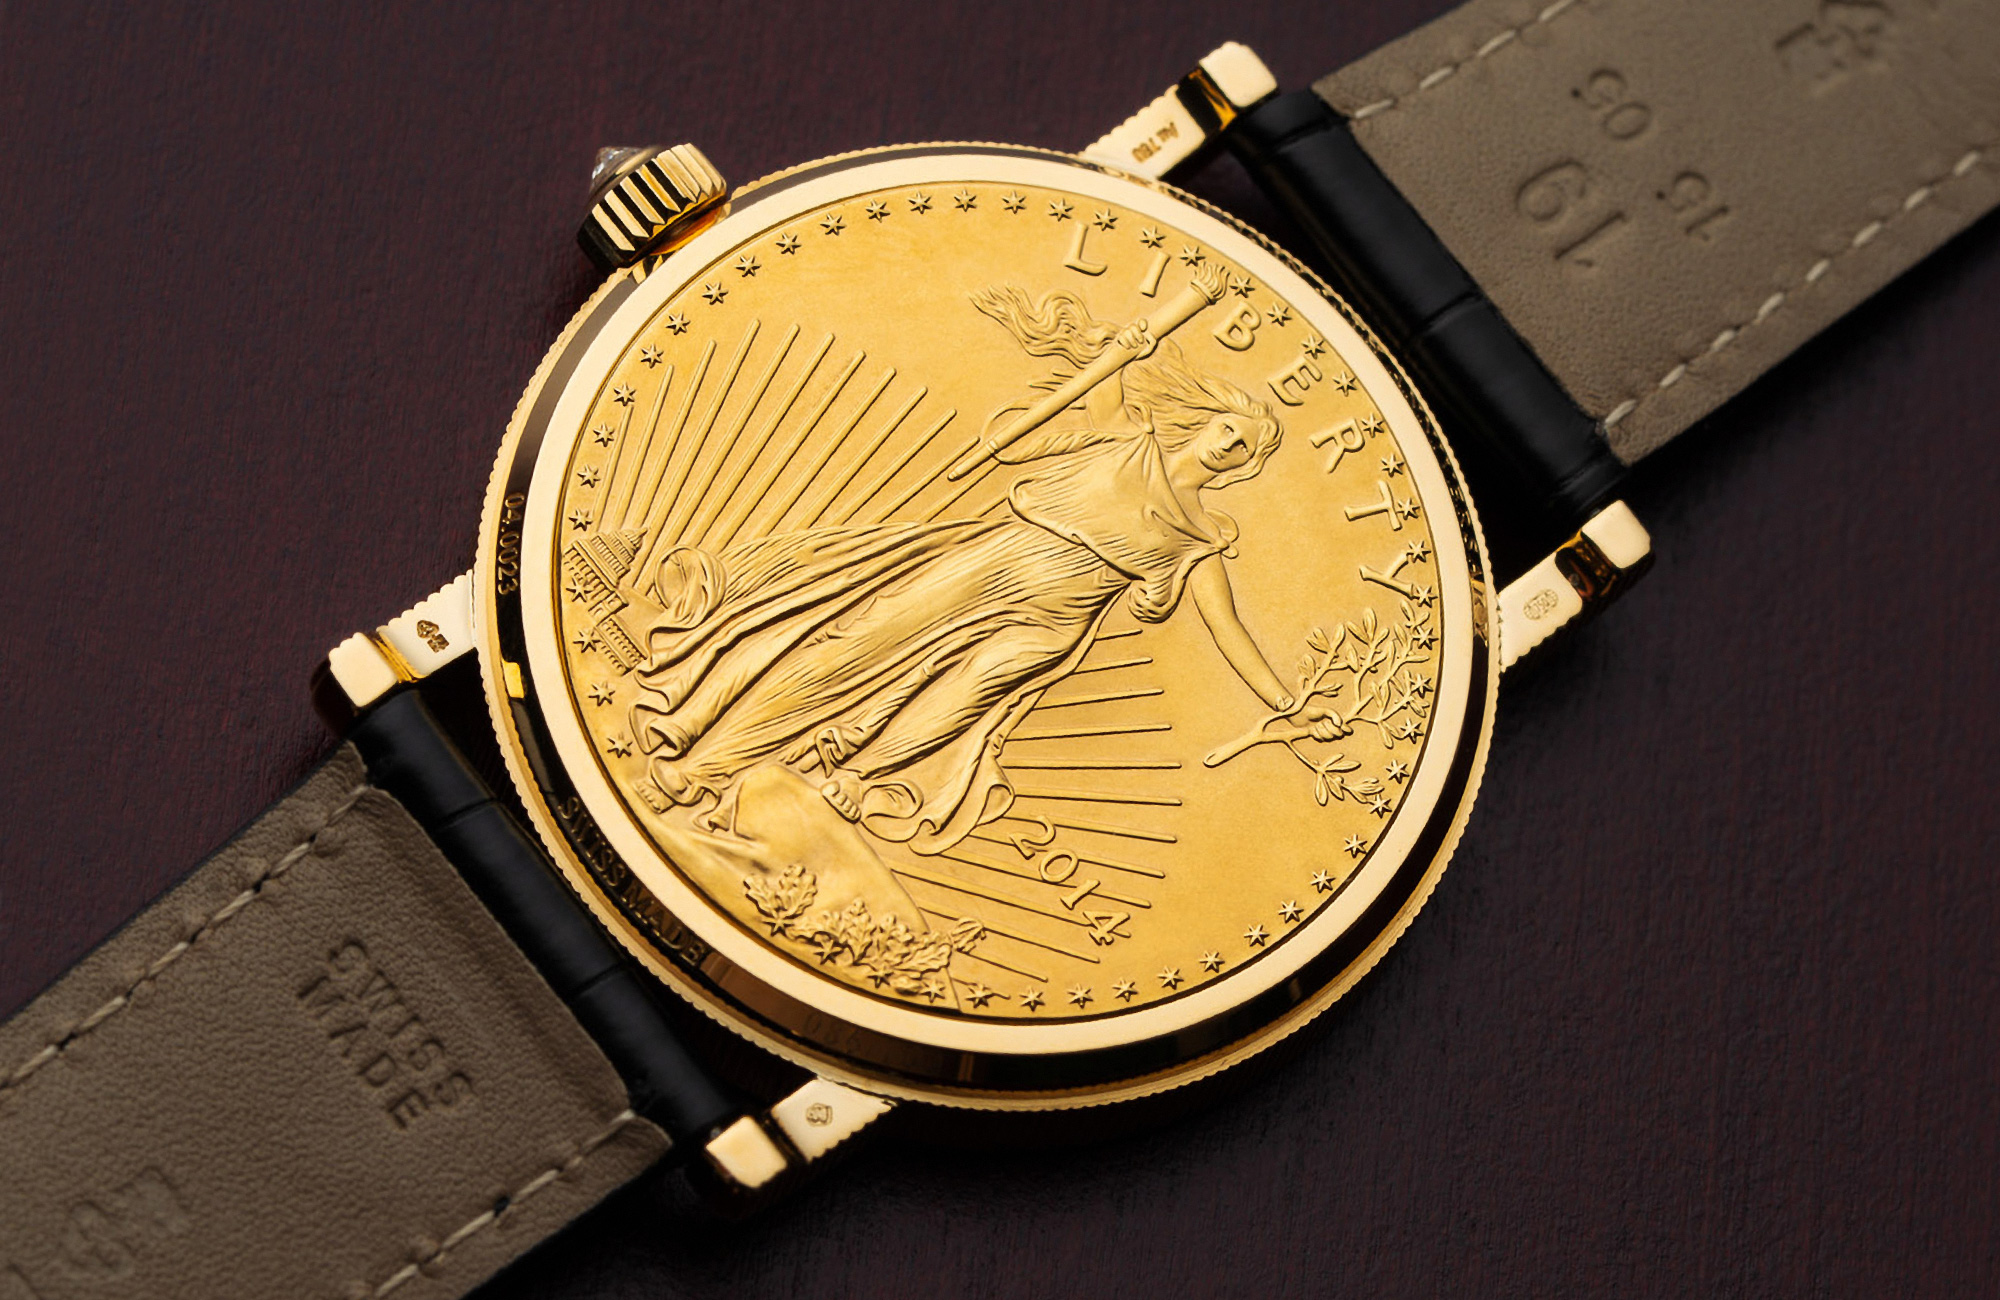 Corum Heritage Coin watch